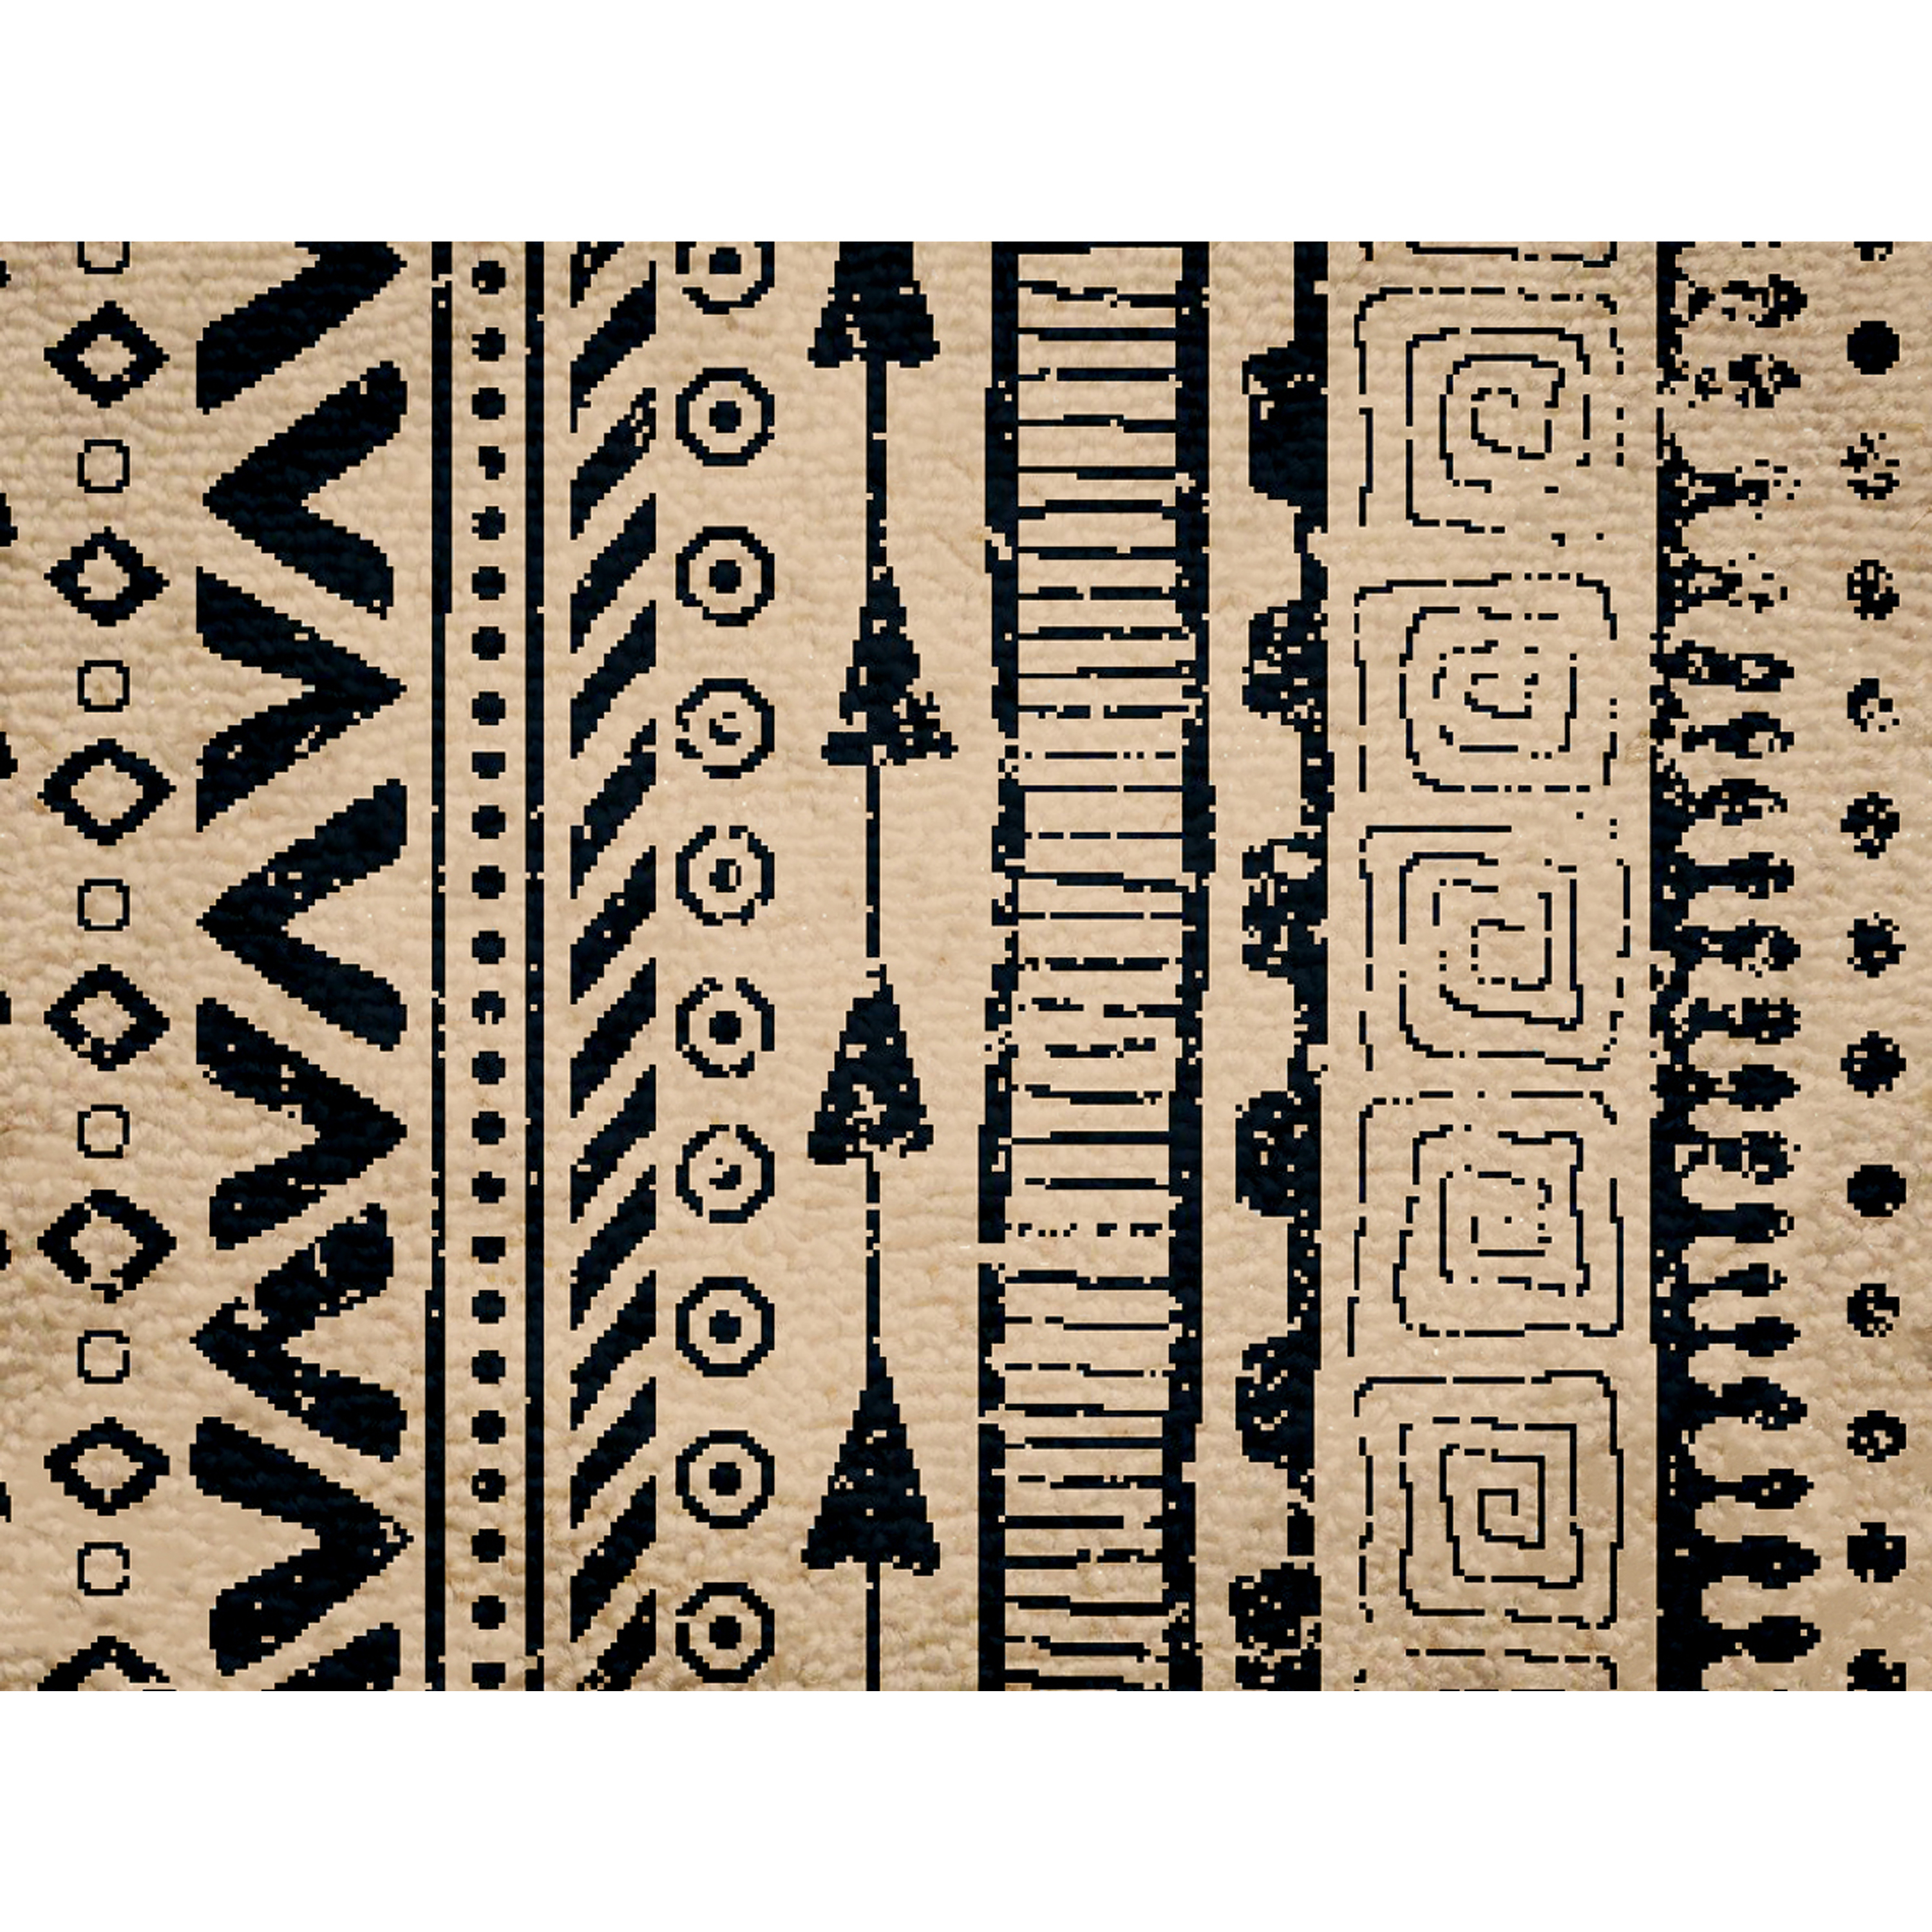 Deerlux Boho Living Room Area Rug With Nonslip Backing, Bohemian Tribal Print Pattern - 4 X 6